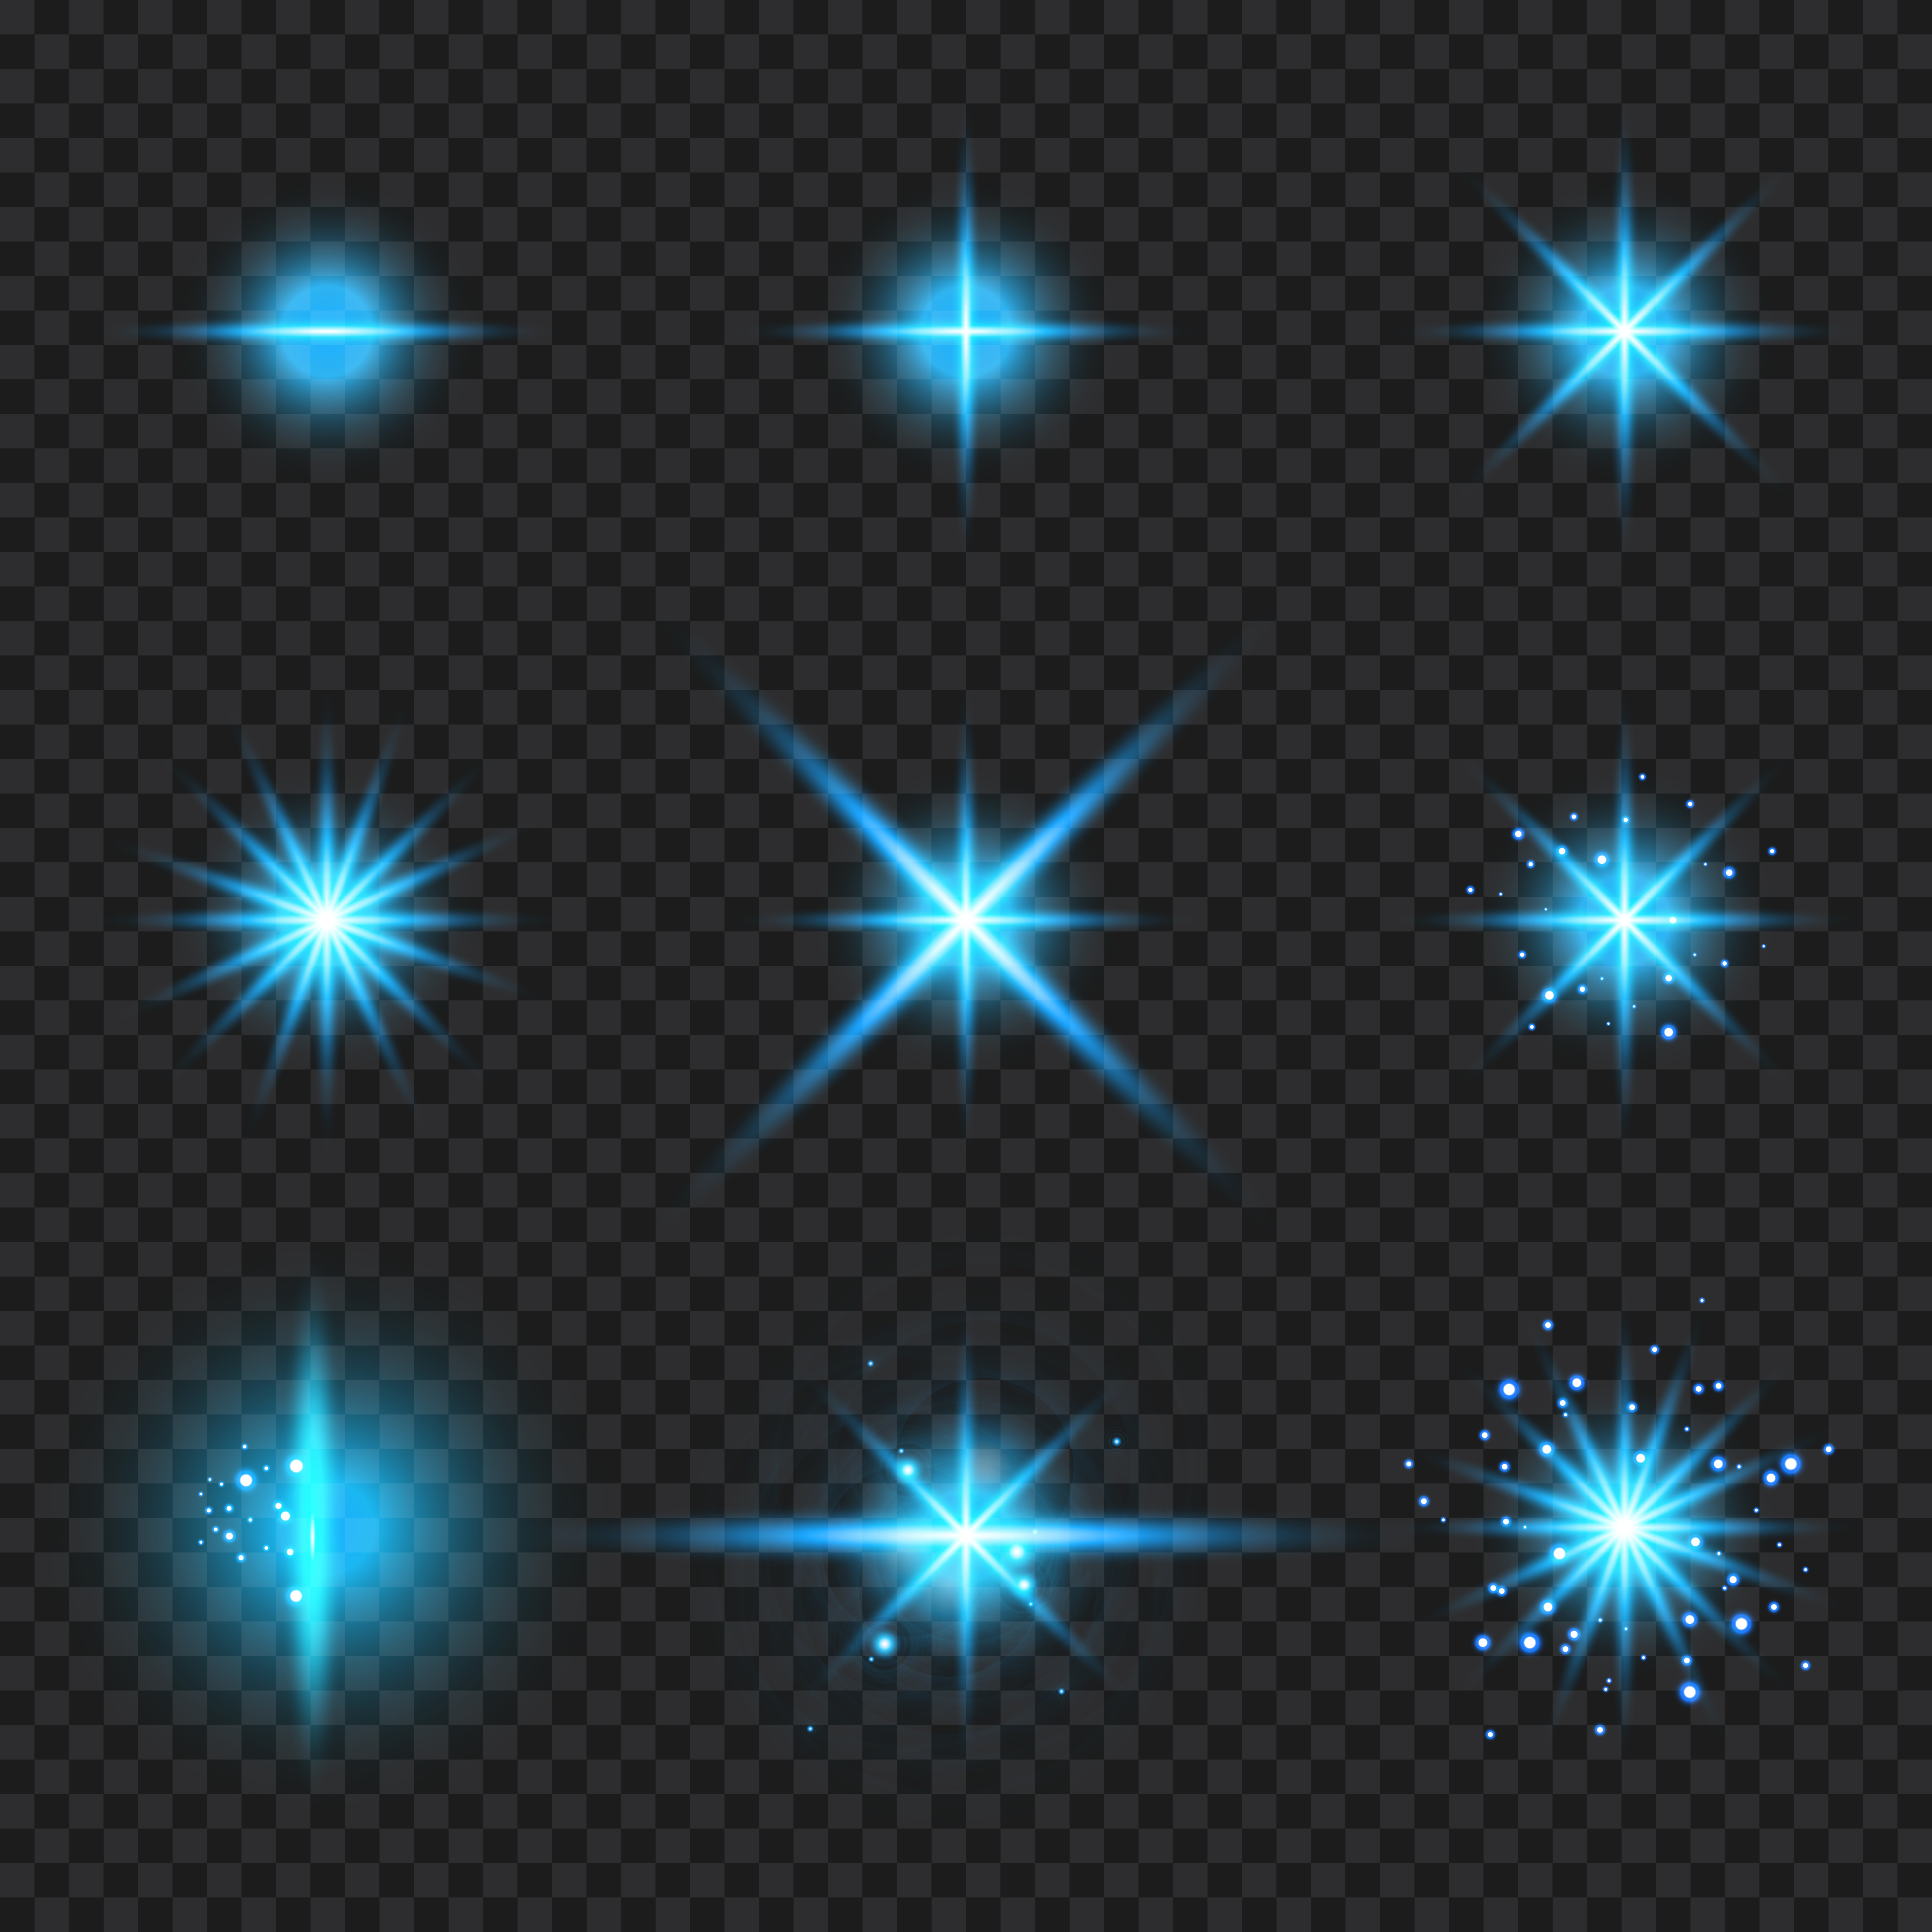 Set Of Elements Glowing Blue Light Burst Rays Stars Bursts With